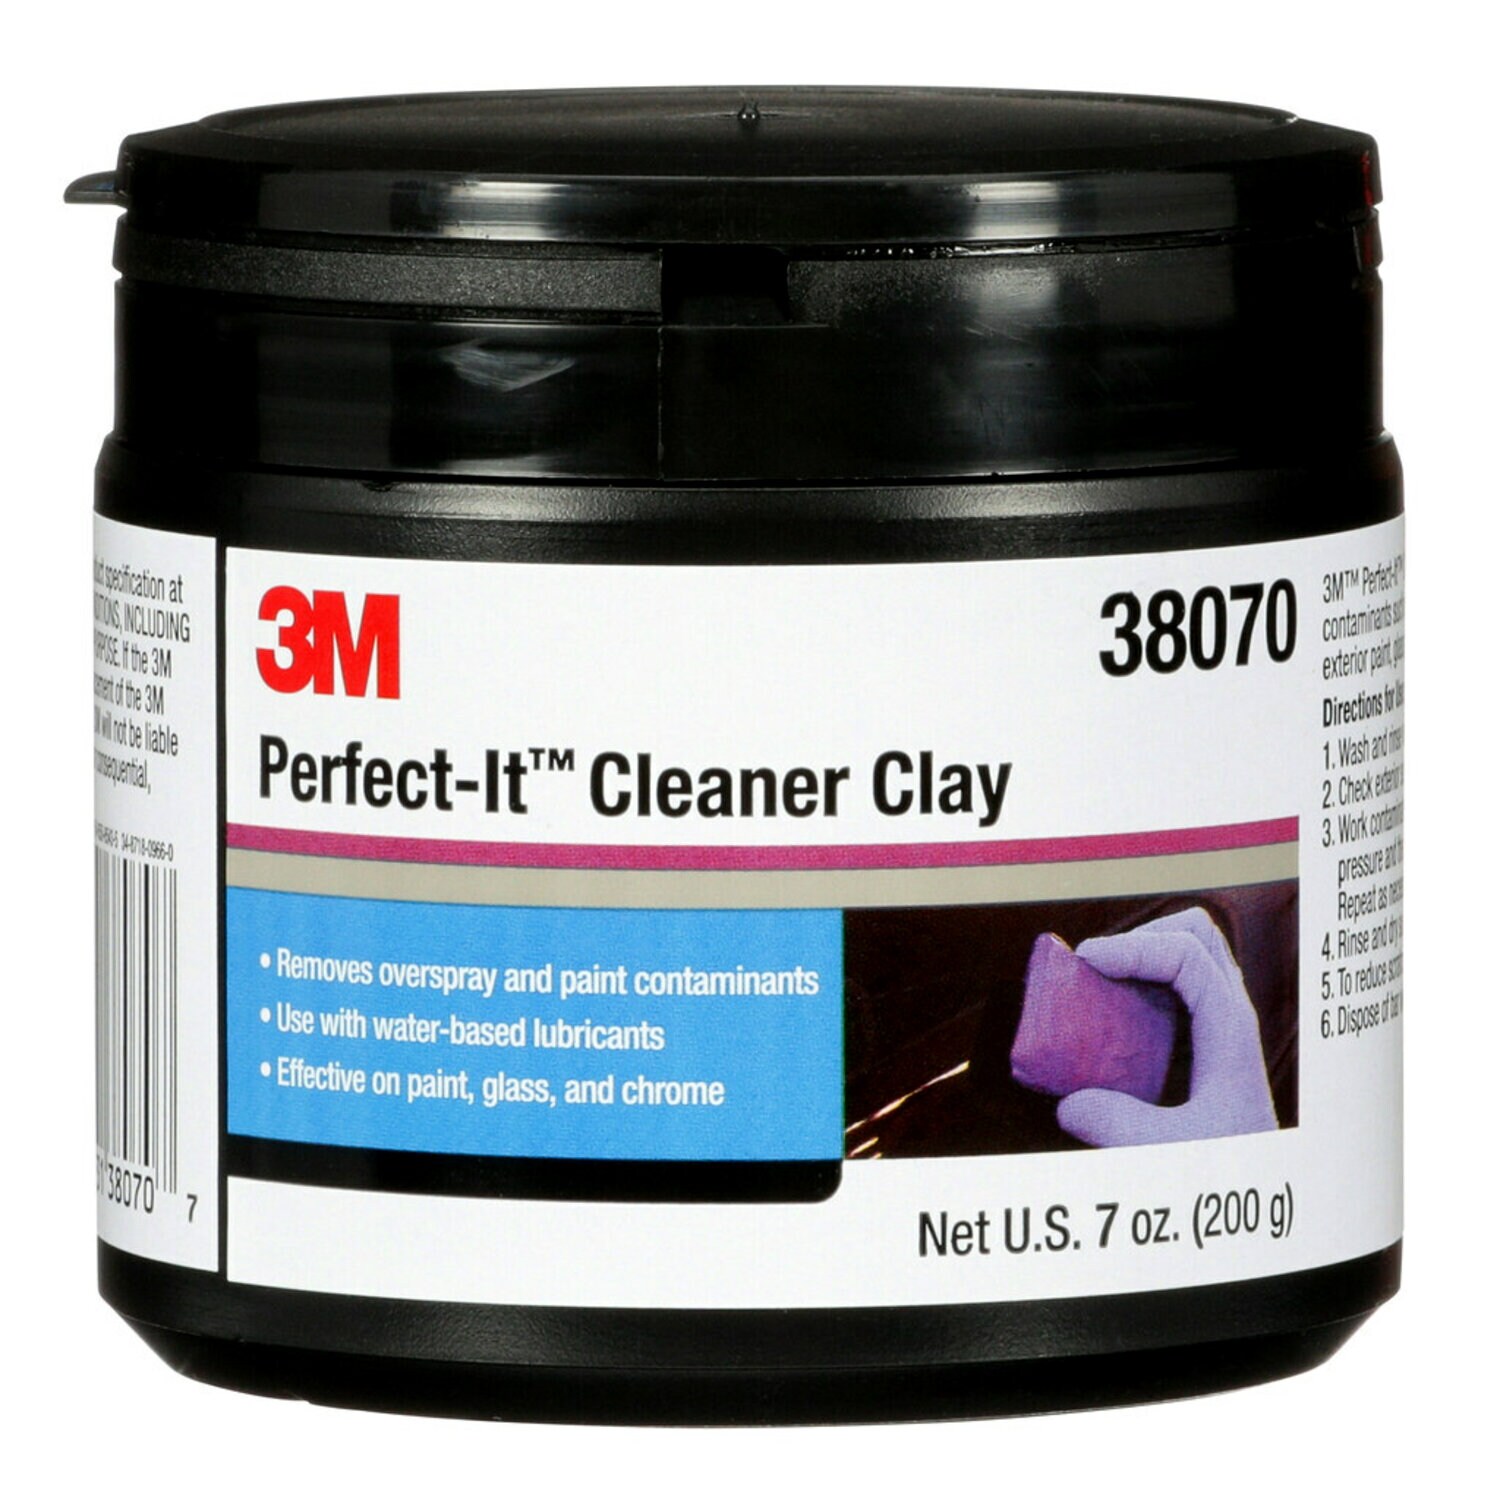 7100105087 - 3M Perfect-It Cleaner Clay, 38070, 200 g, 1 bar per bottle, 6 bottles
per case